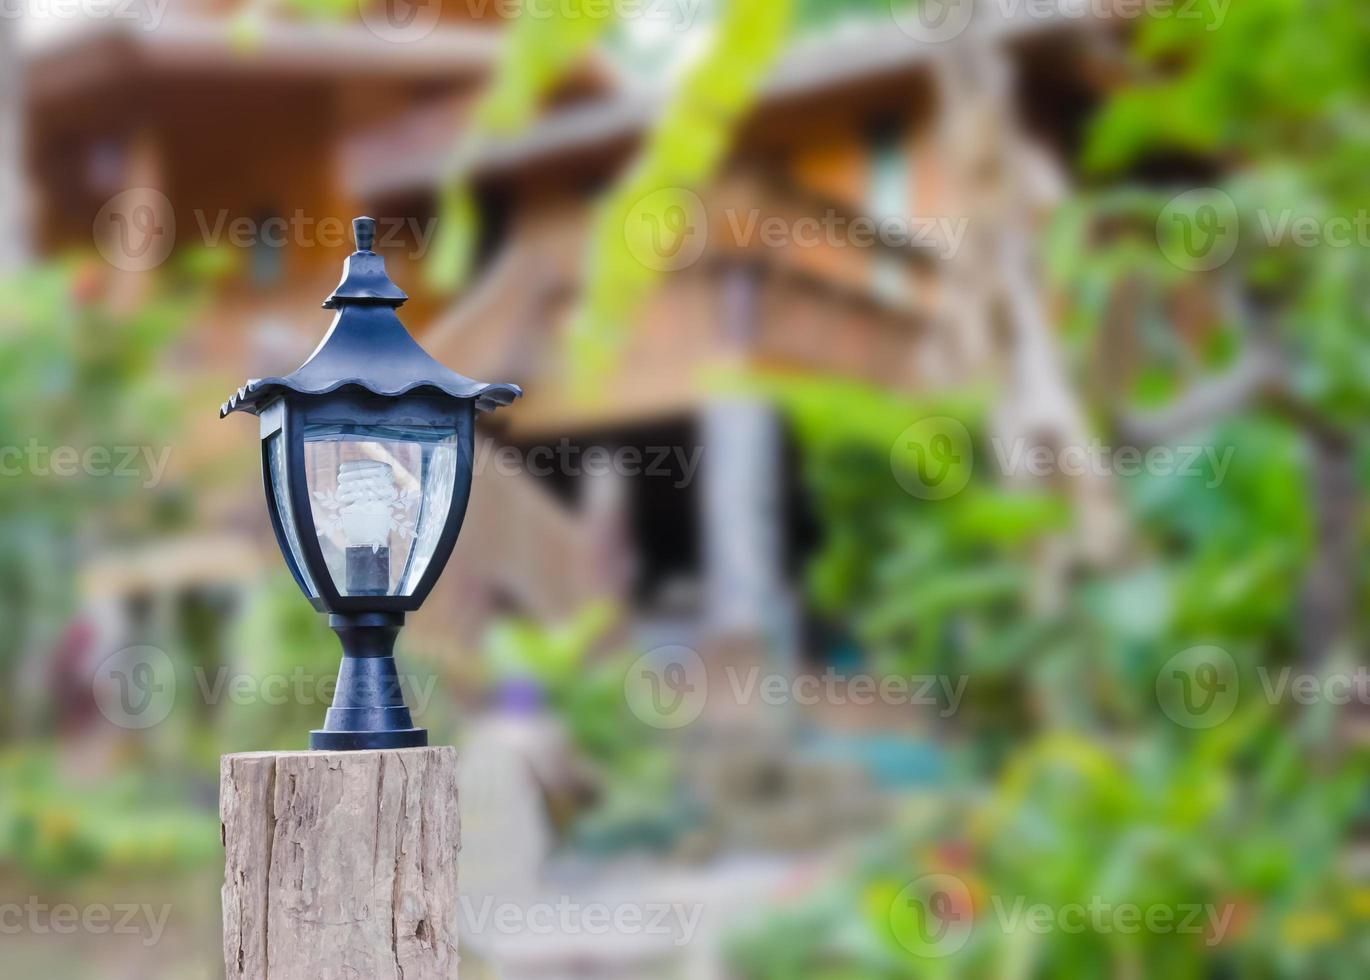 Lamp in garden with blur blockhouse background photo